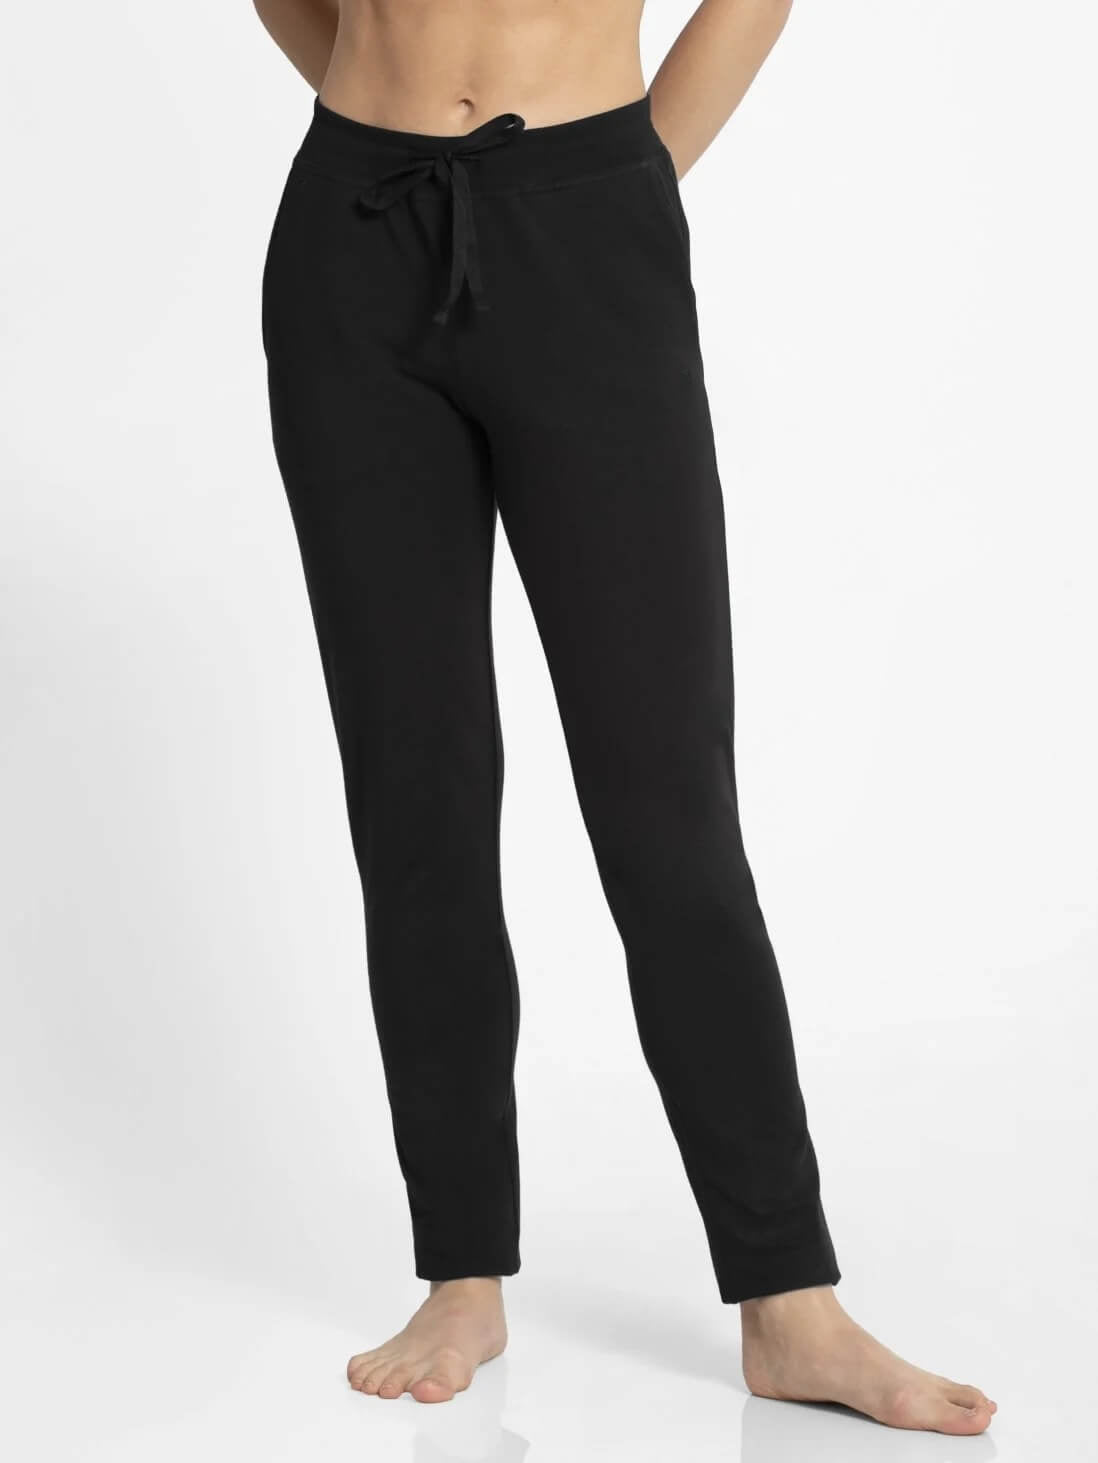 Jockey Black Lounge Pants for Women #1301 [New Fit]